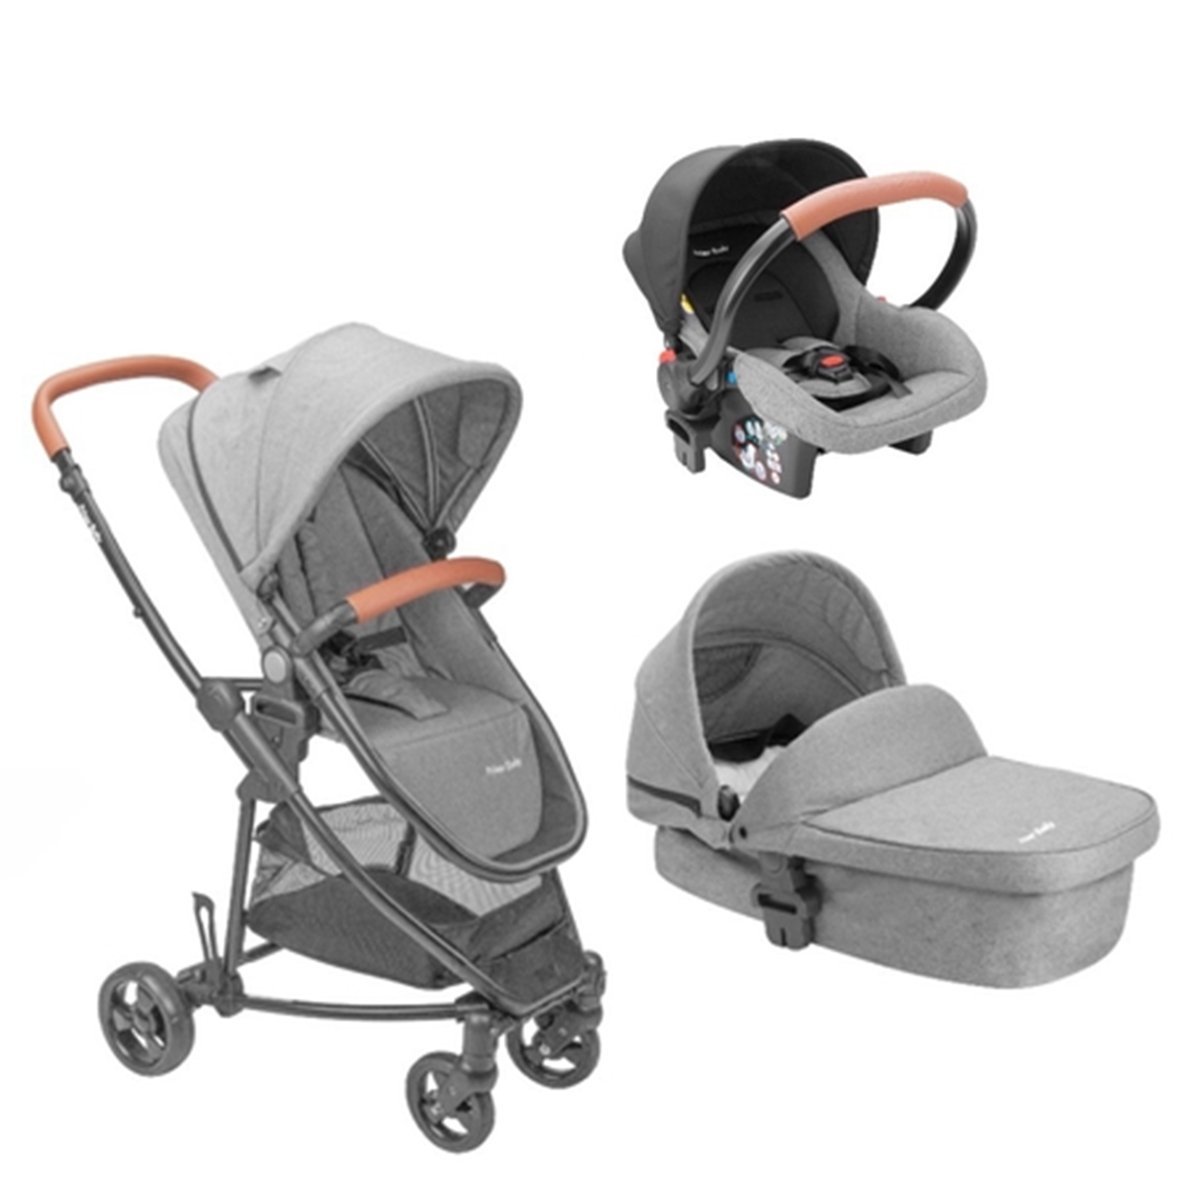 Carrinho Bebê Passeio Travel System Reclinável + Bebê Conforto + Moisés Cinza Tygo 6 Gray Prime Baby